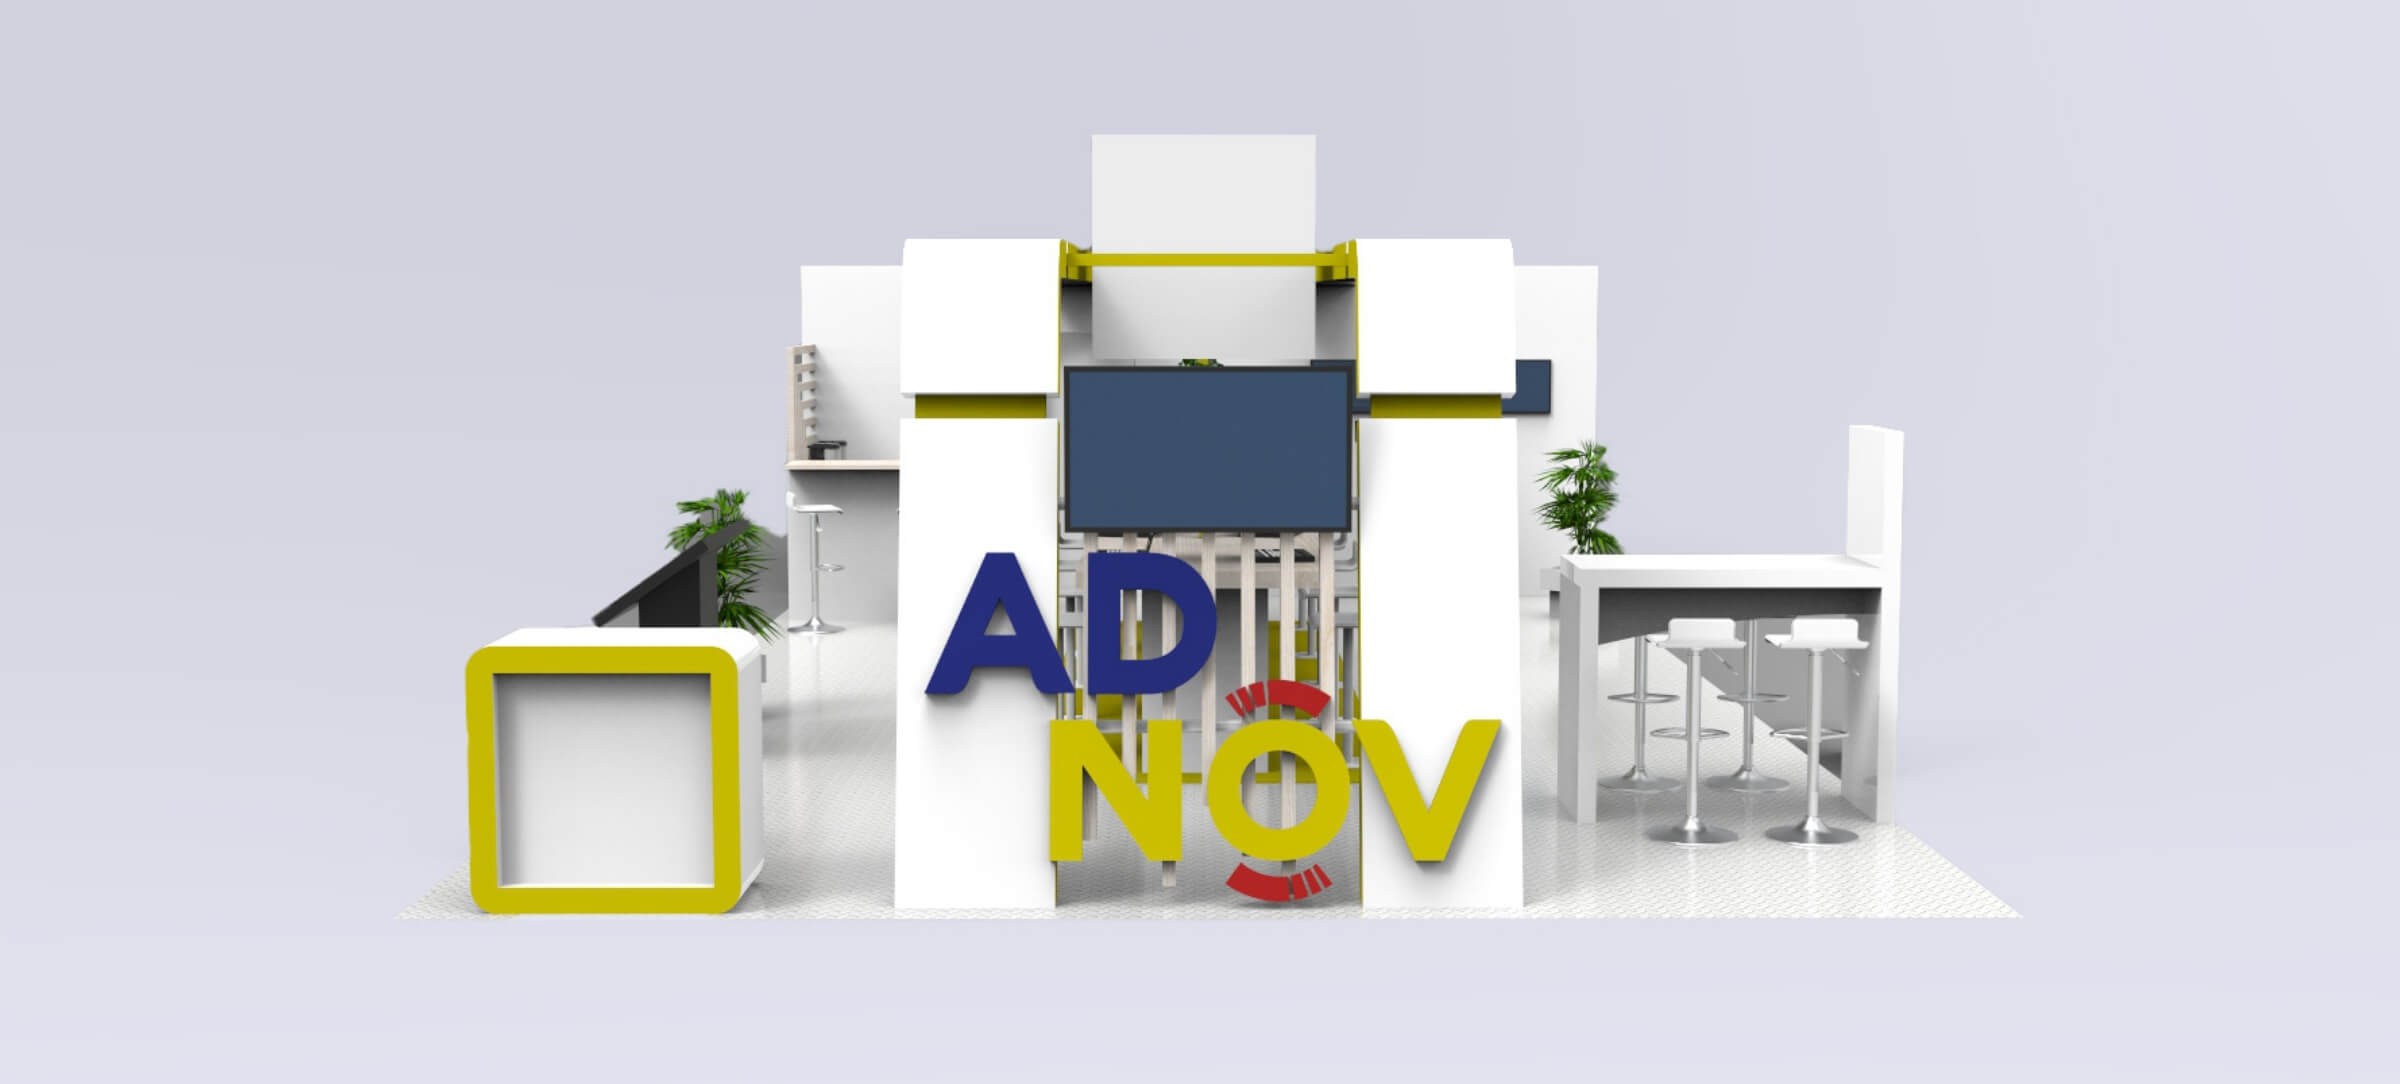 adsn-adenov-stand-maquette-slide2-1200x542px@2x